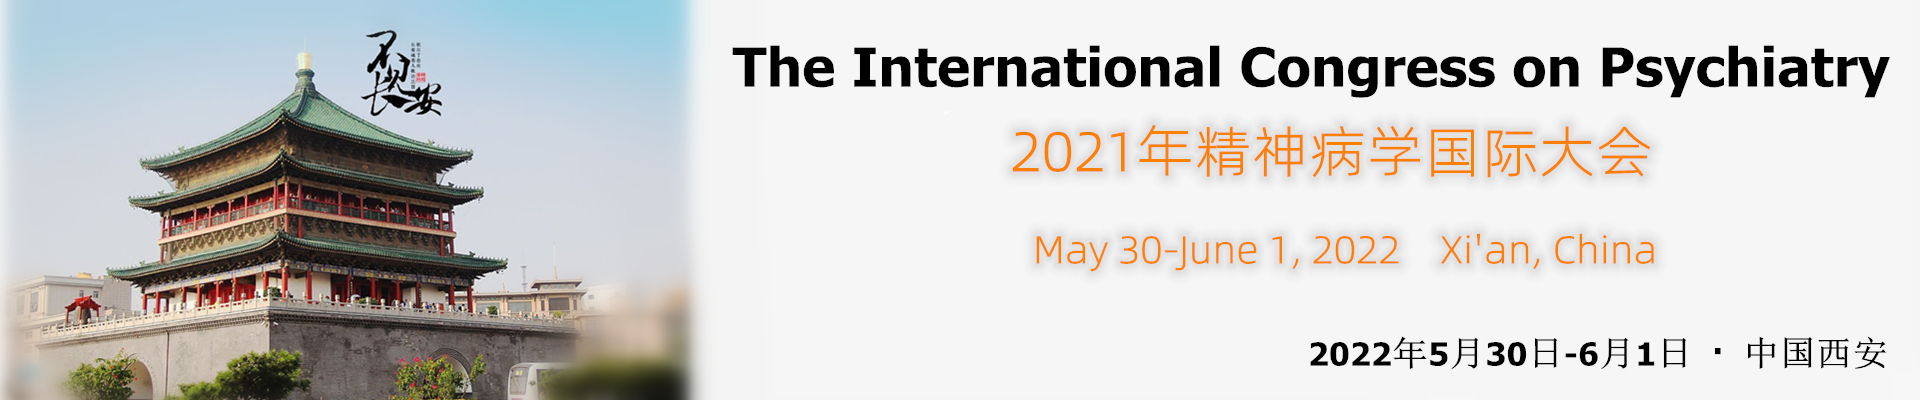 The International Congress on Psychiatry (CP 2022), Xi'an, Shaanxi, China